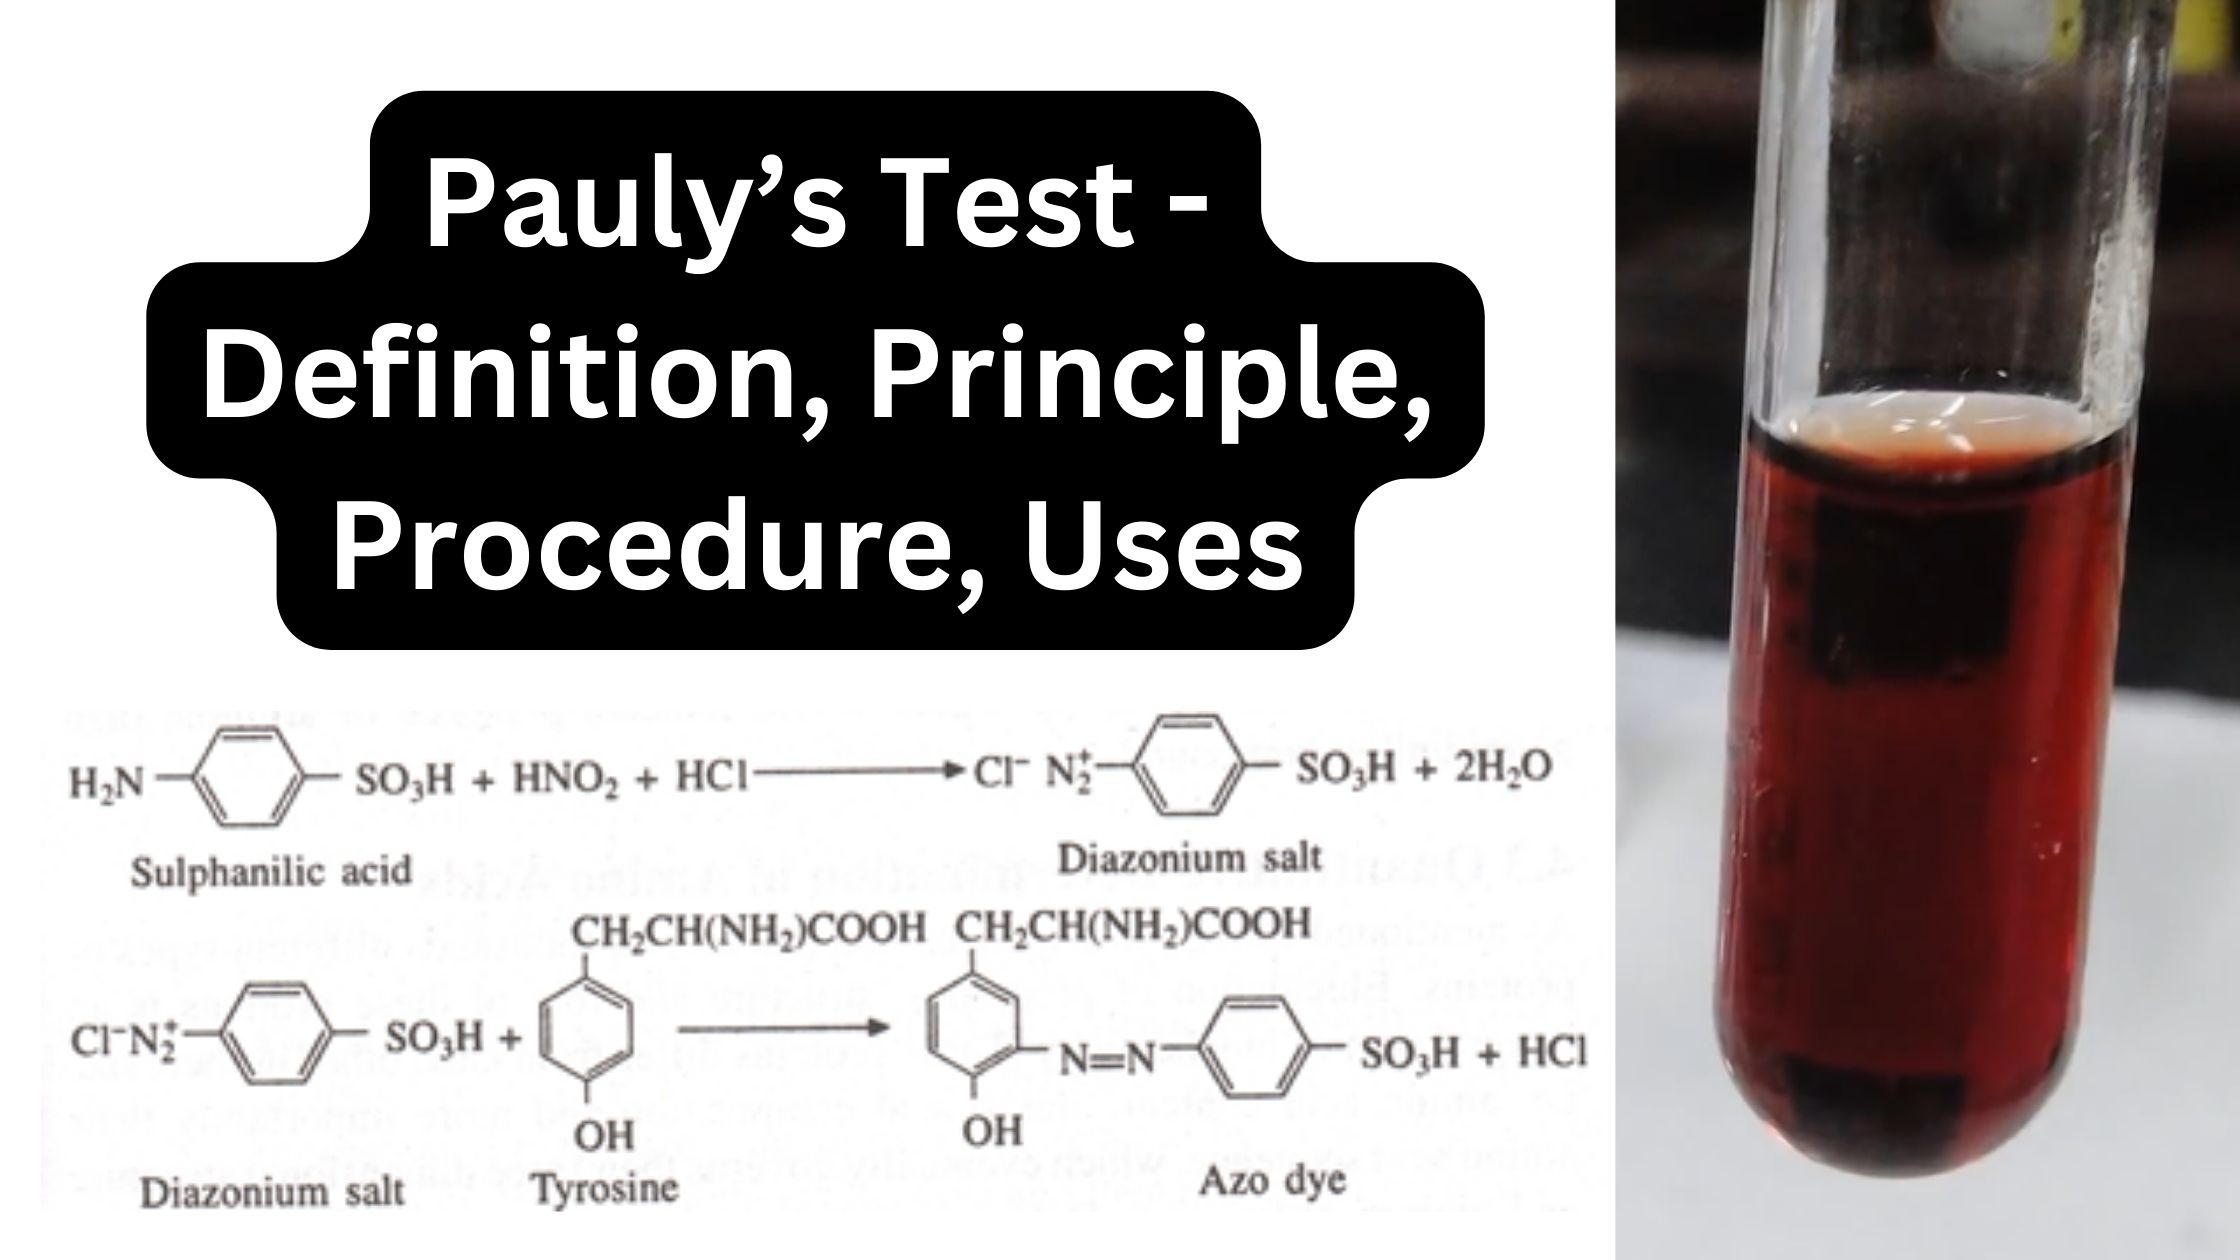 Pauly's test: Principle, Reaction, Reagents, Procedure and Result  Interpretation